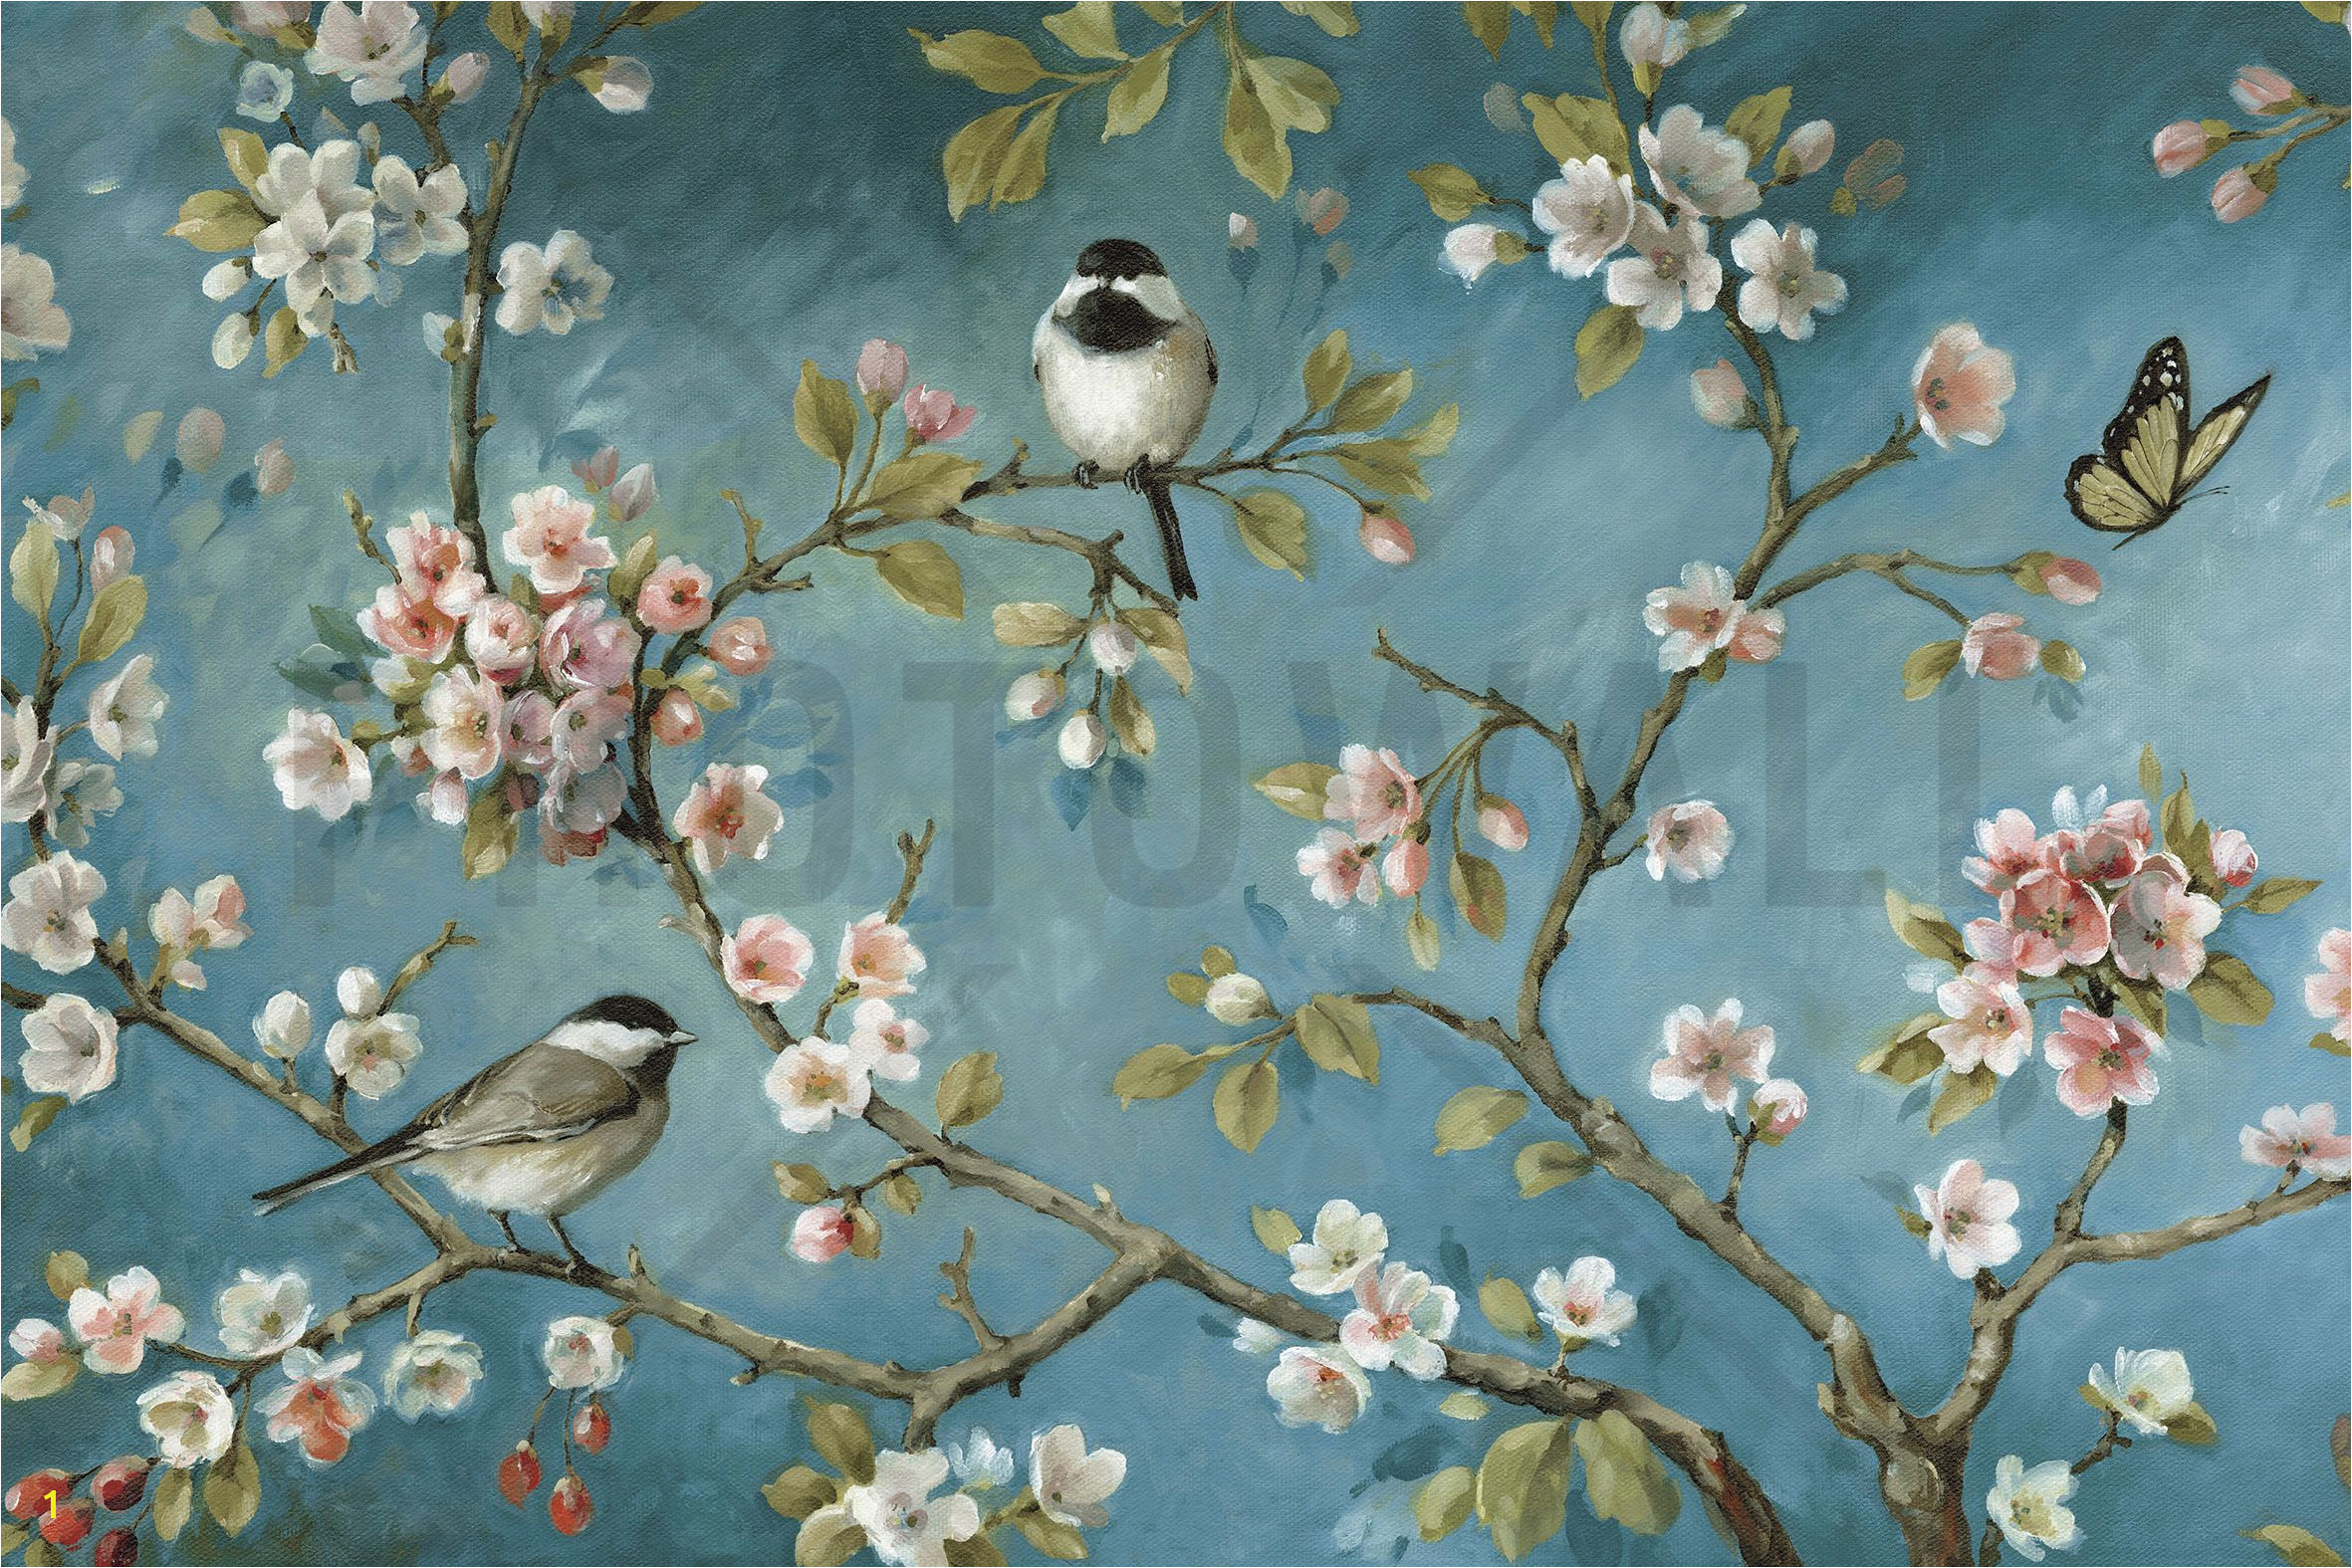 Oriental Wall Murals Uk Vintage Birds Wallpaper orchard Wallpaper In 2019